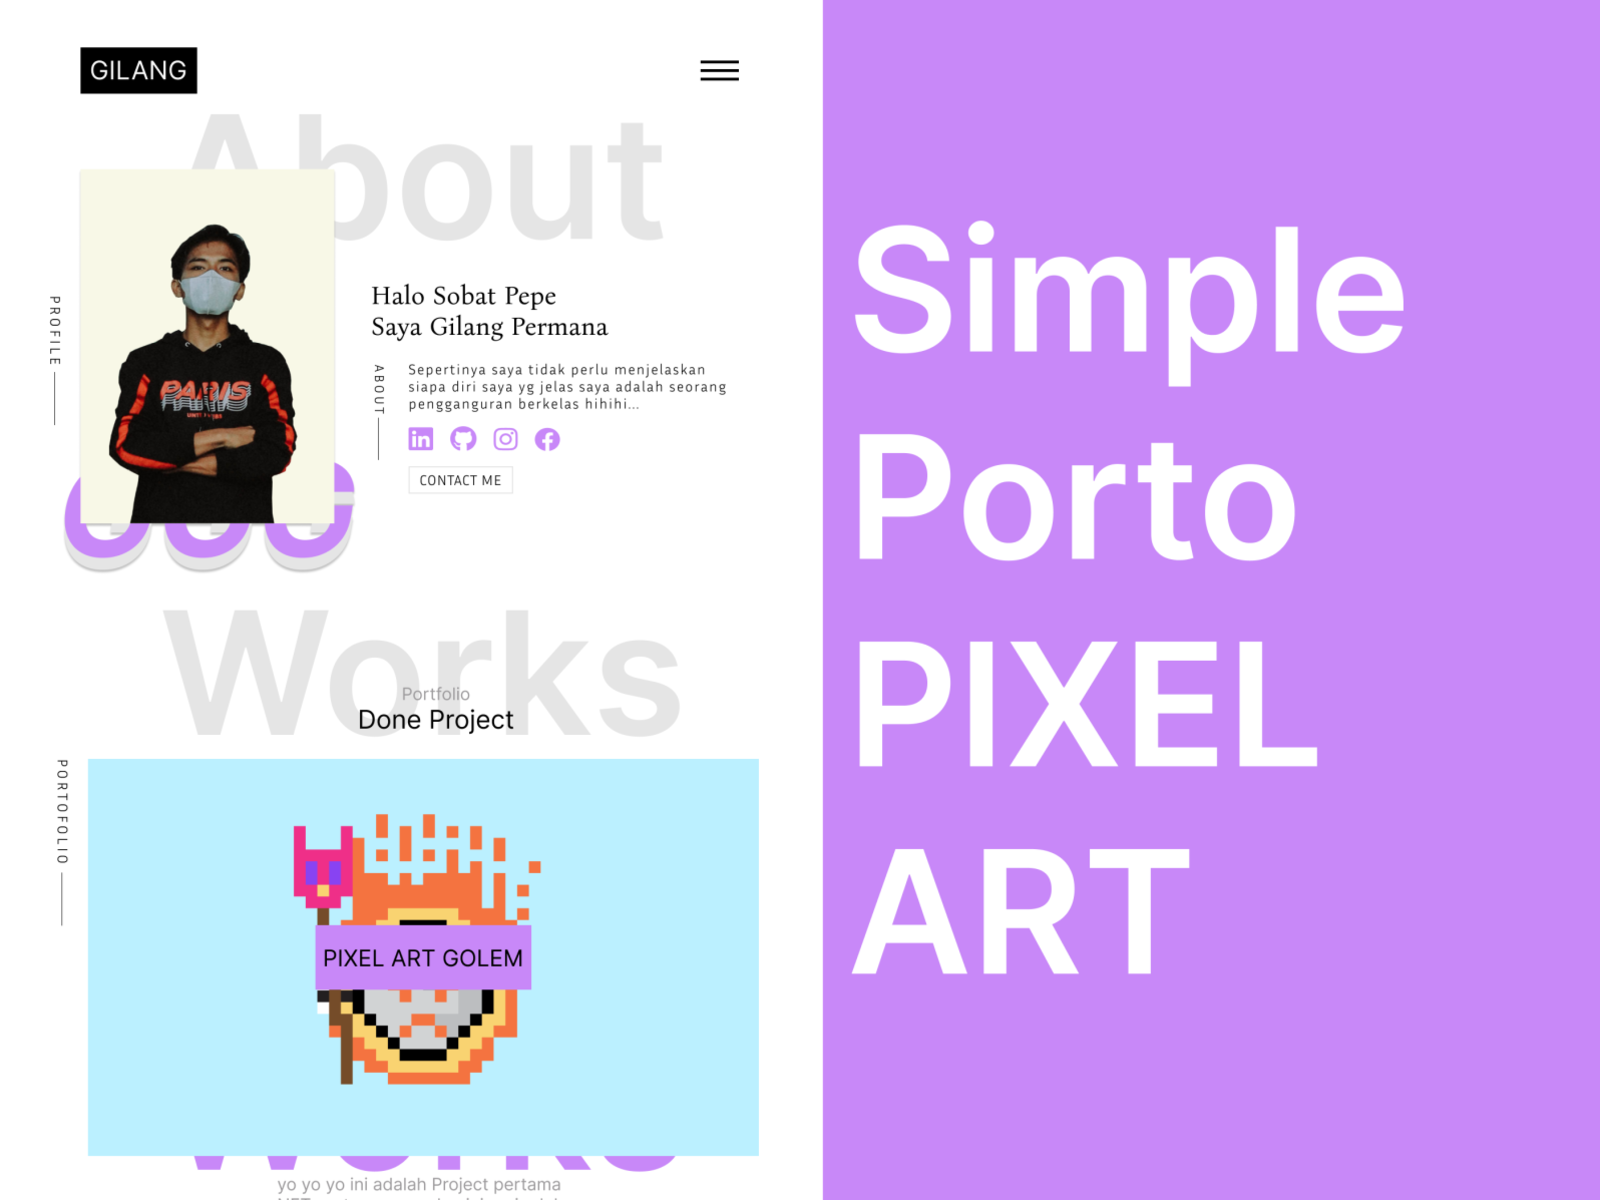 Pixel Art — Art Portfolio